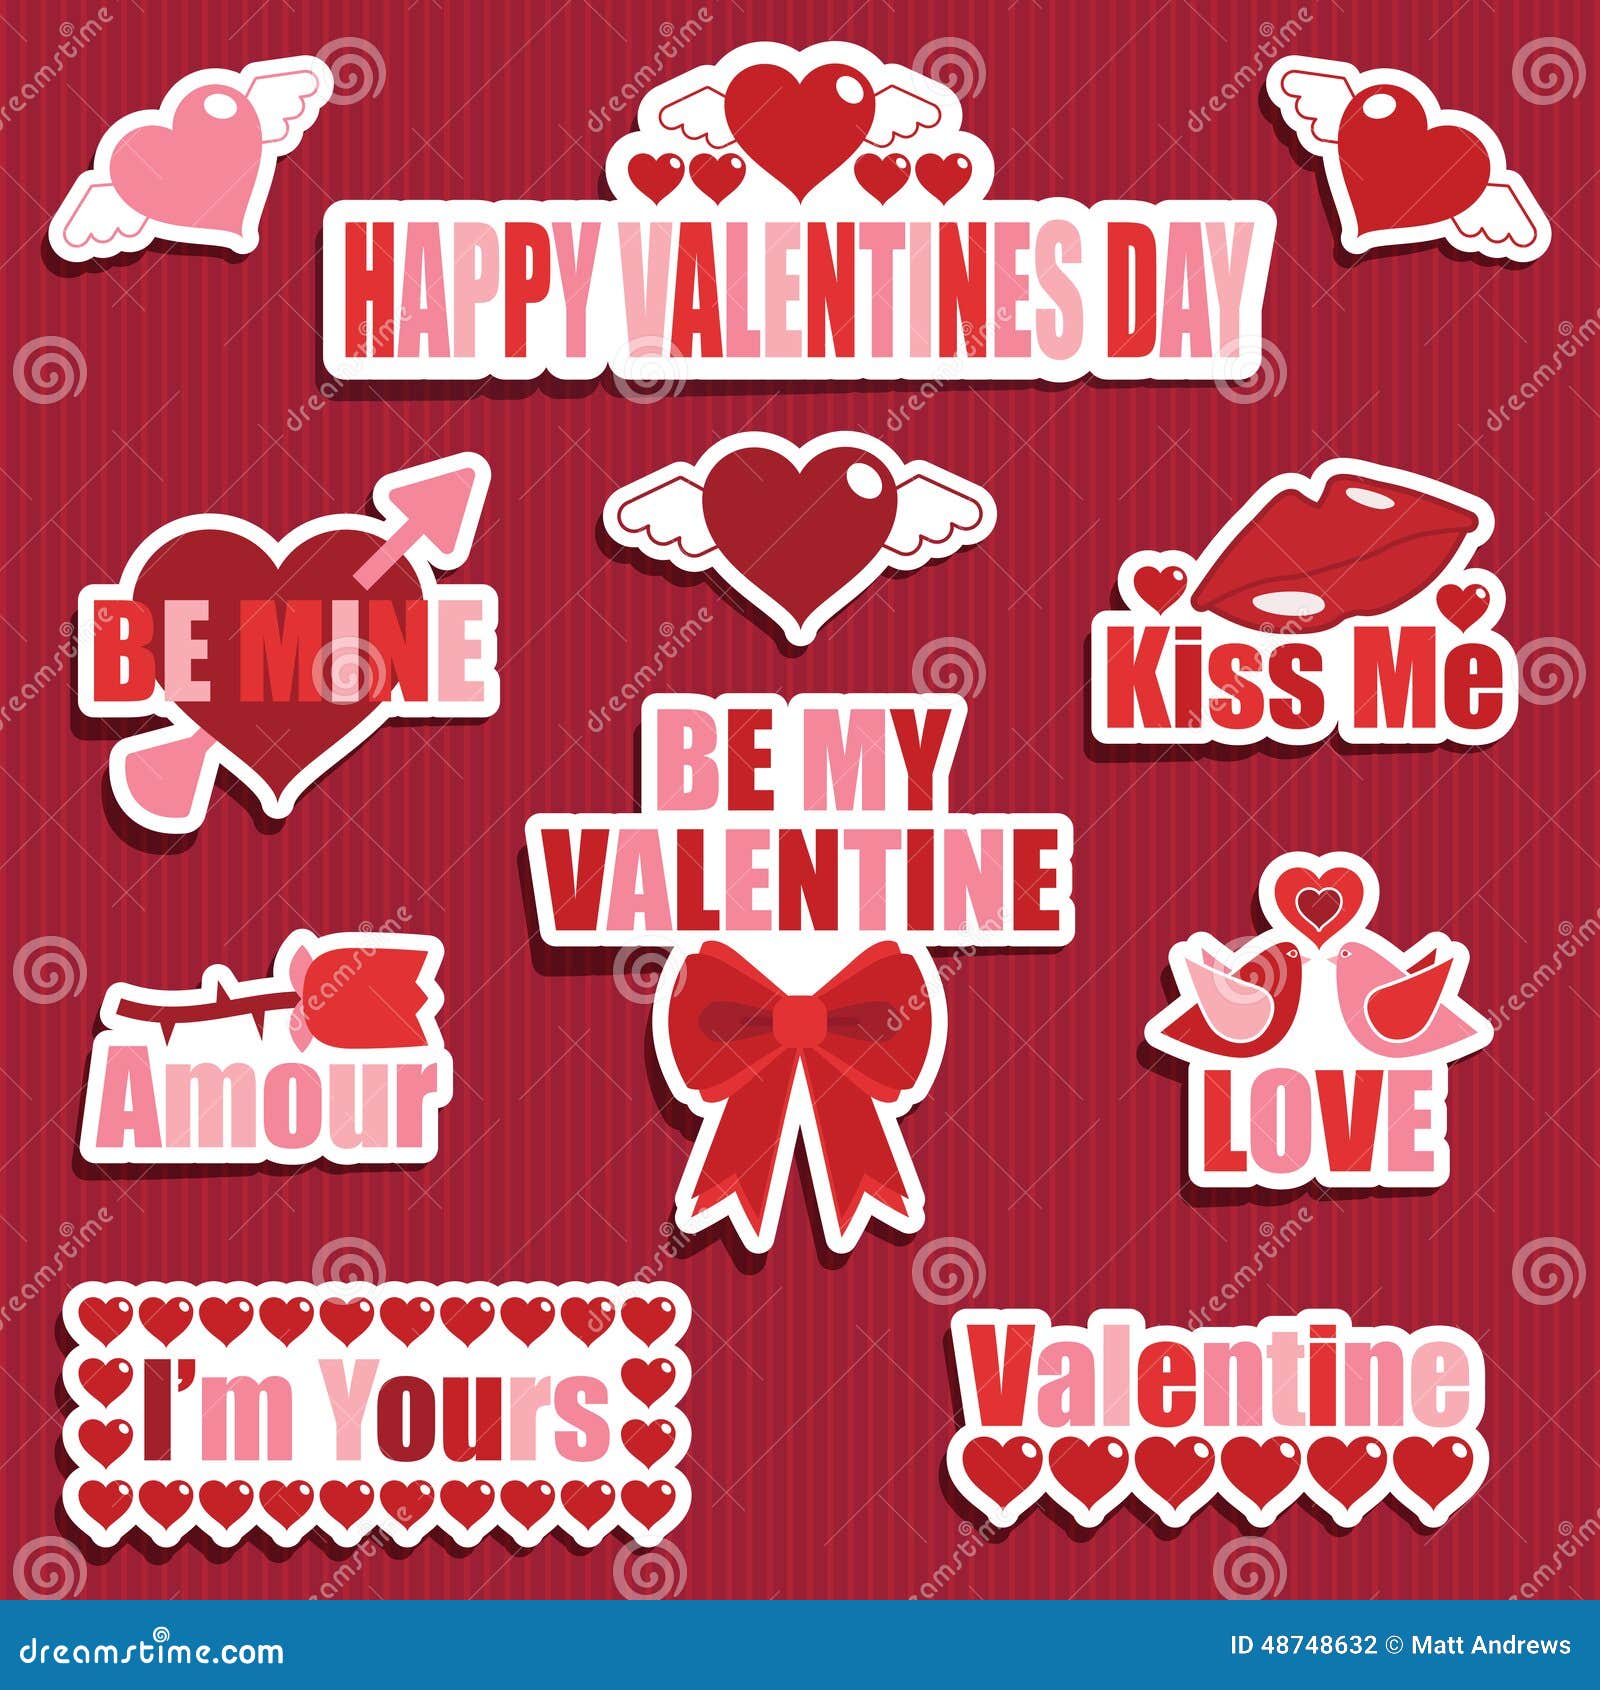 Valentine stickers stock vector. Illustration of type - 48748632